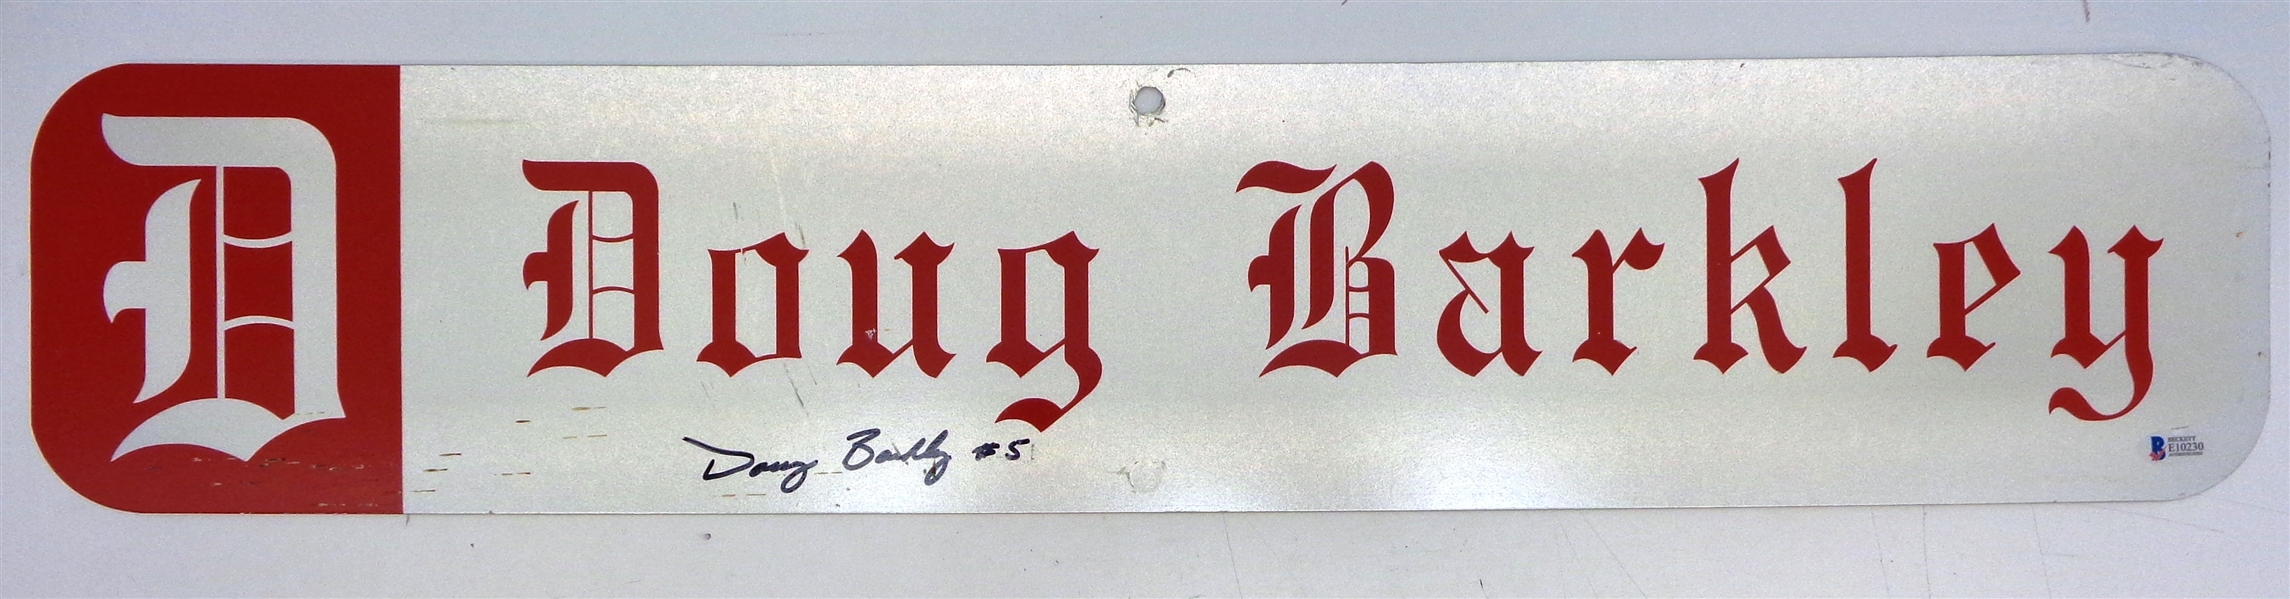 Doug Barkley Autographed 6x30 Custom Street Sign